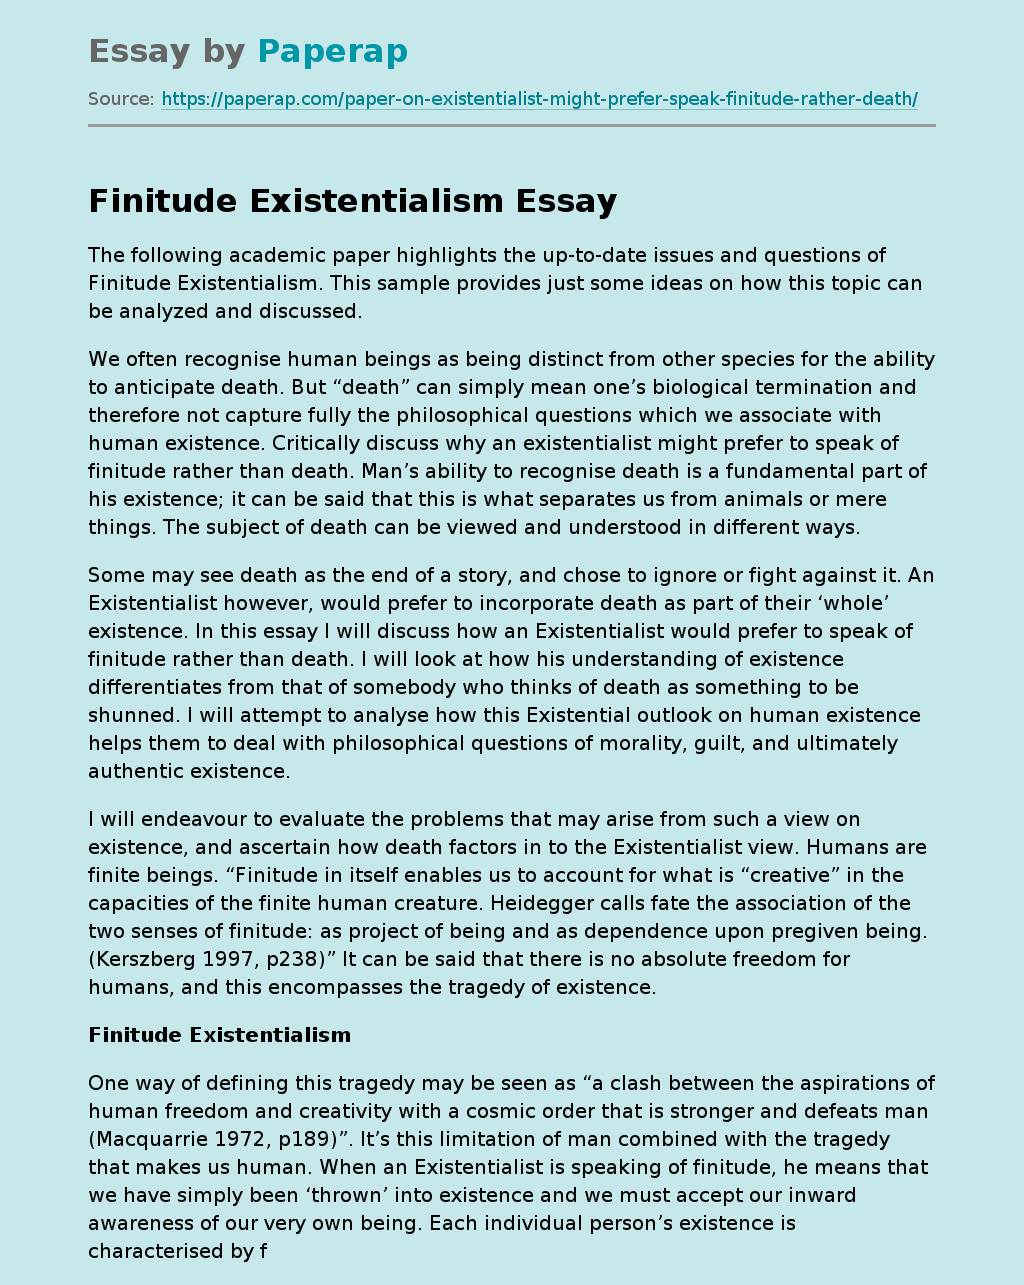 Finitude Existentialism